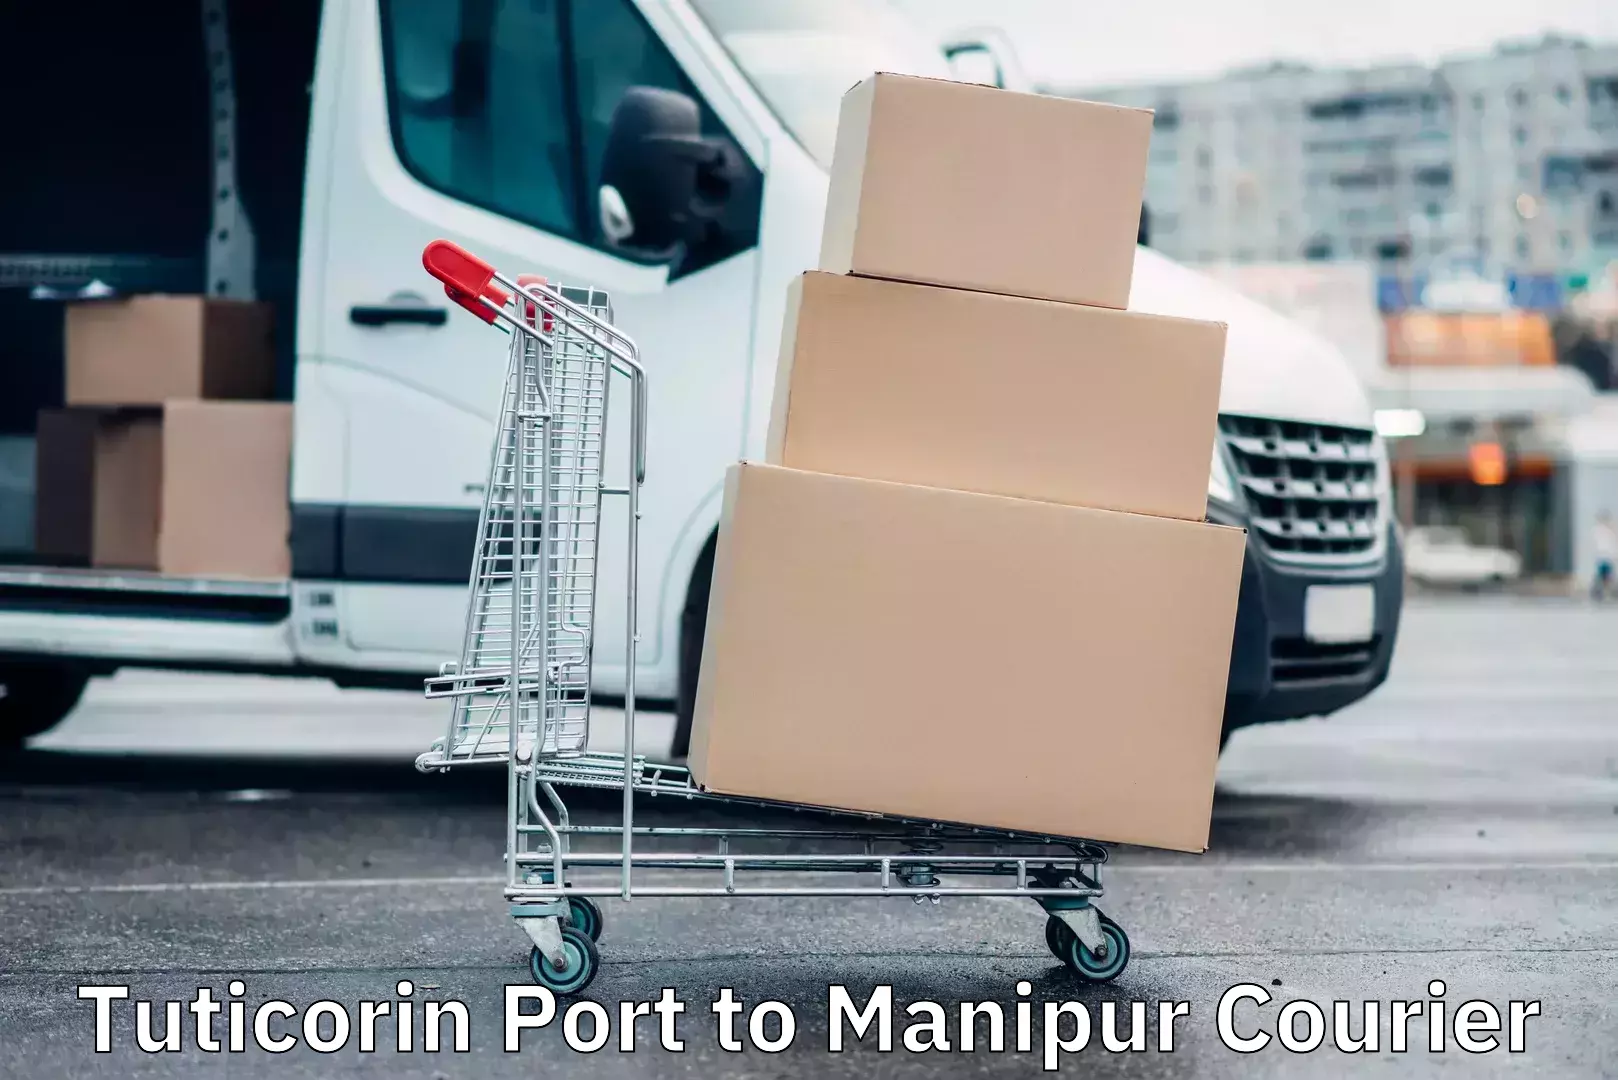 Express logistics providers Tuticorin Port to Manipur